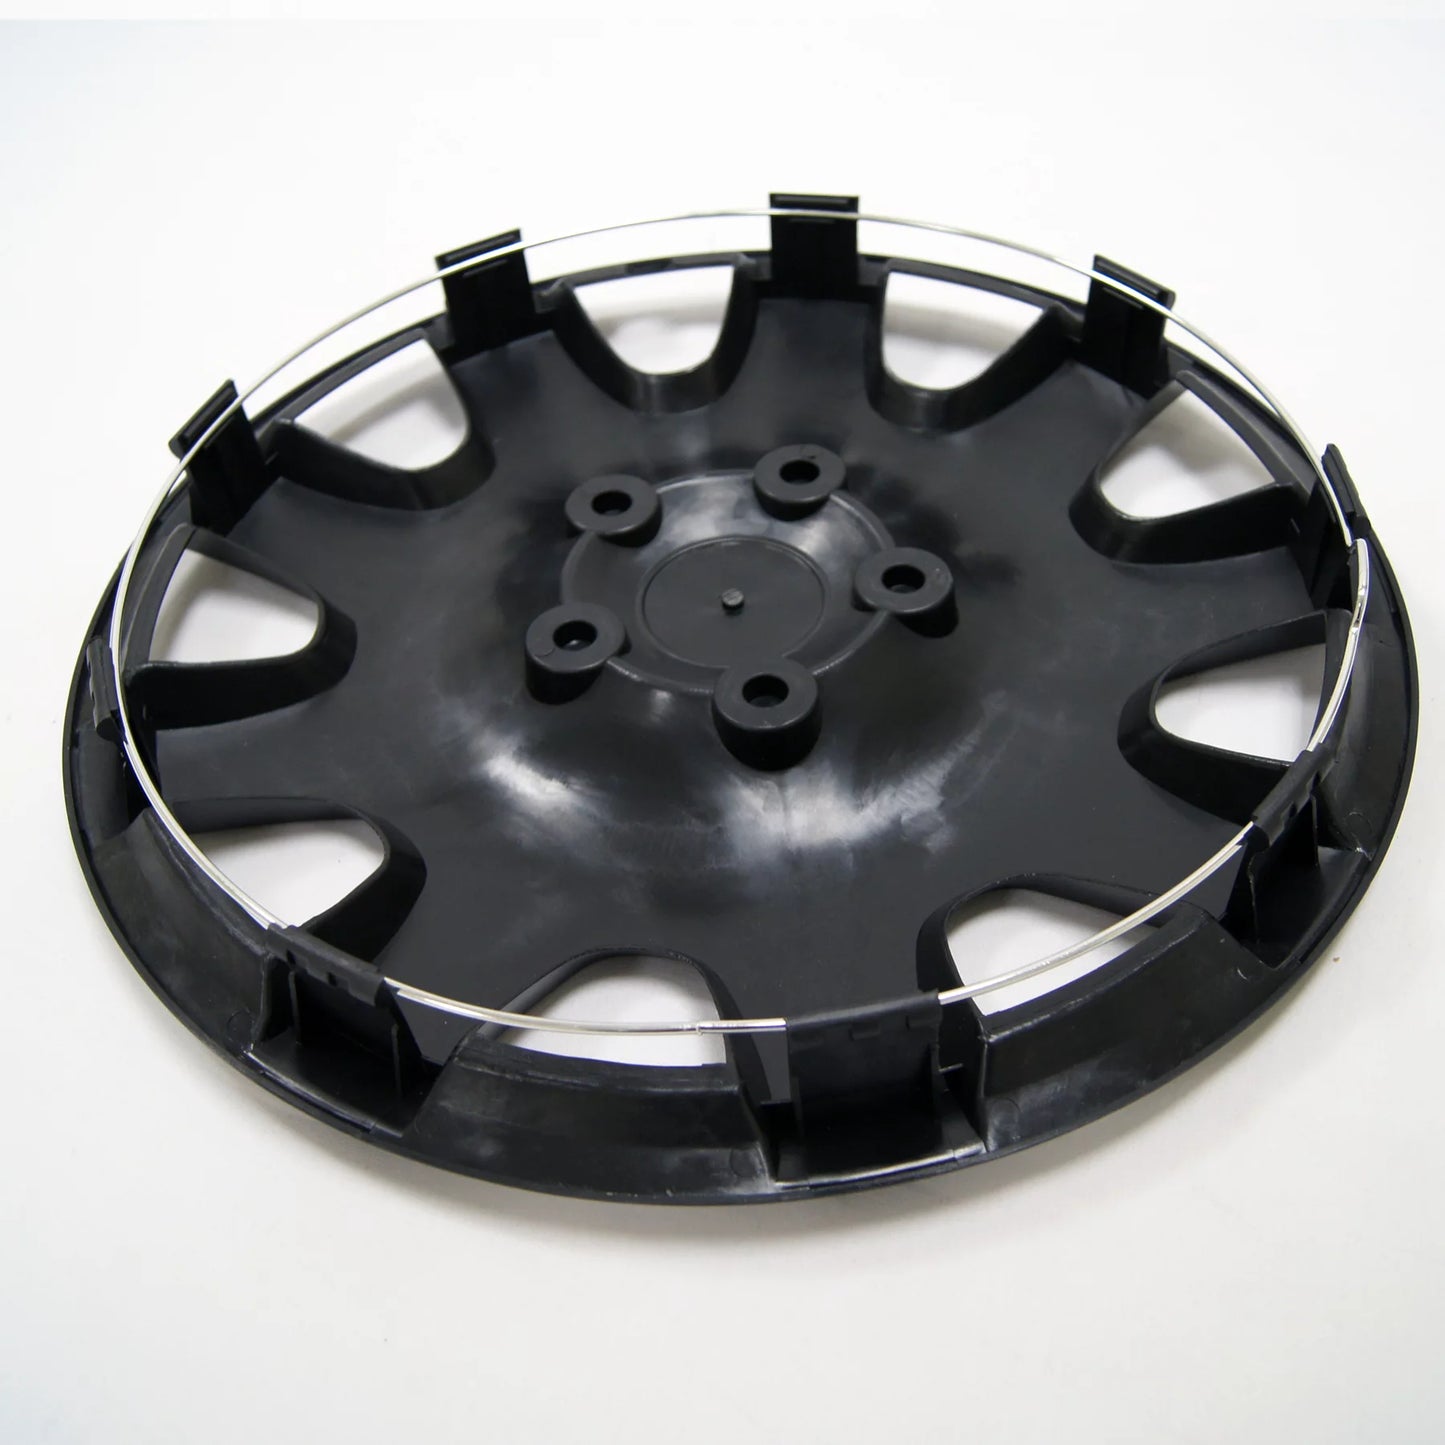 TuningPros WSC-126B15 Set of 4 Matte Black Hubcaps 15" - Hub Caps Wheel Skin Cover 15 inches 4 Pcs Set